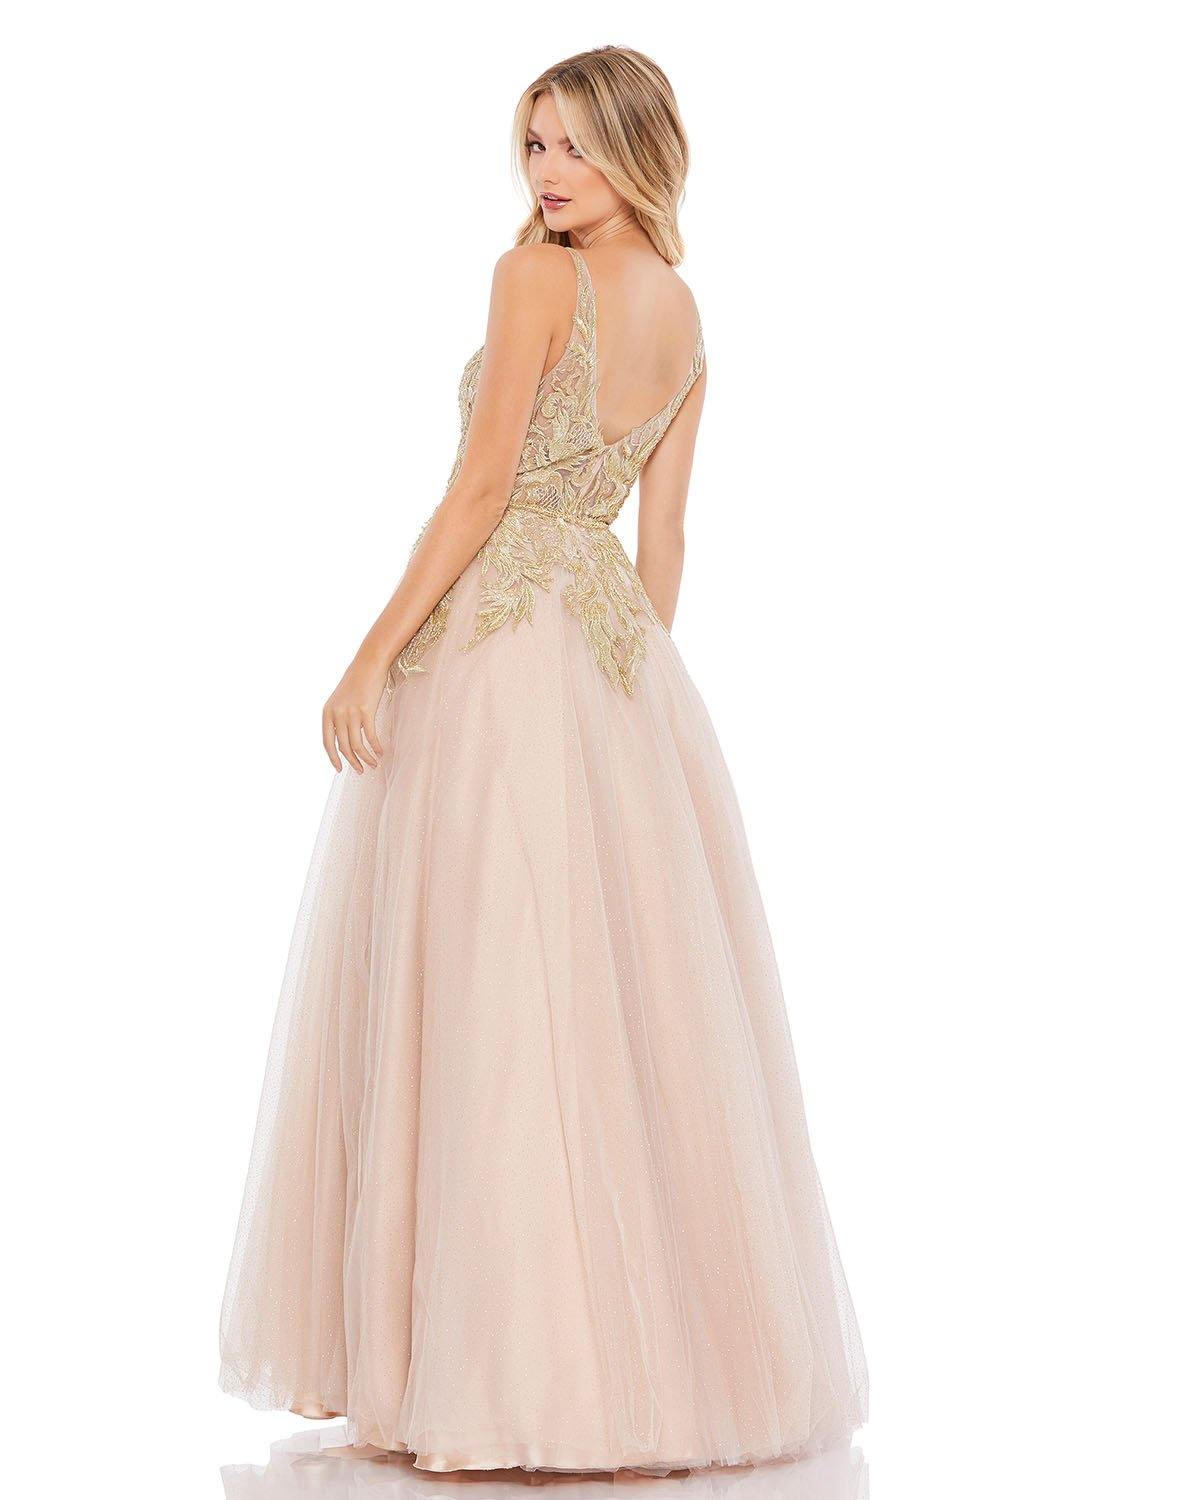 Mac Duggal Prom Long Sleeveless Ball Ball Gown 11170 - The Dress Outlet